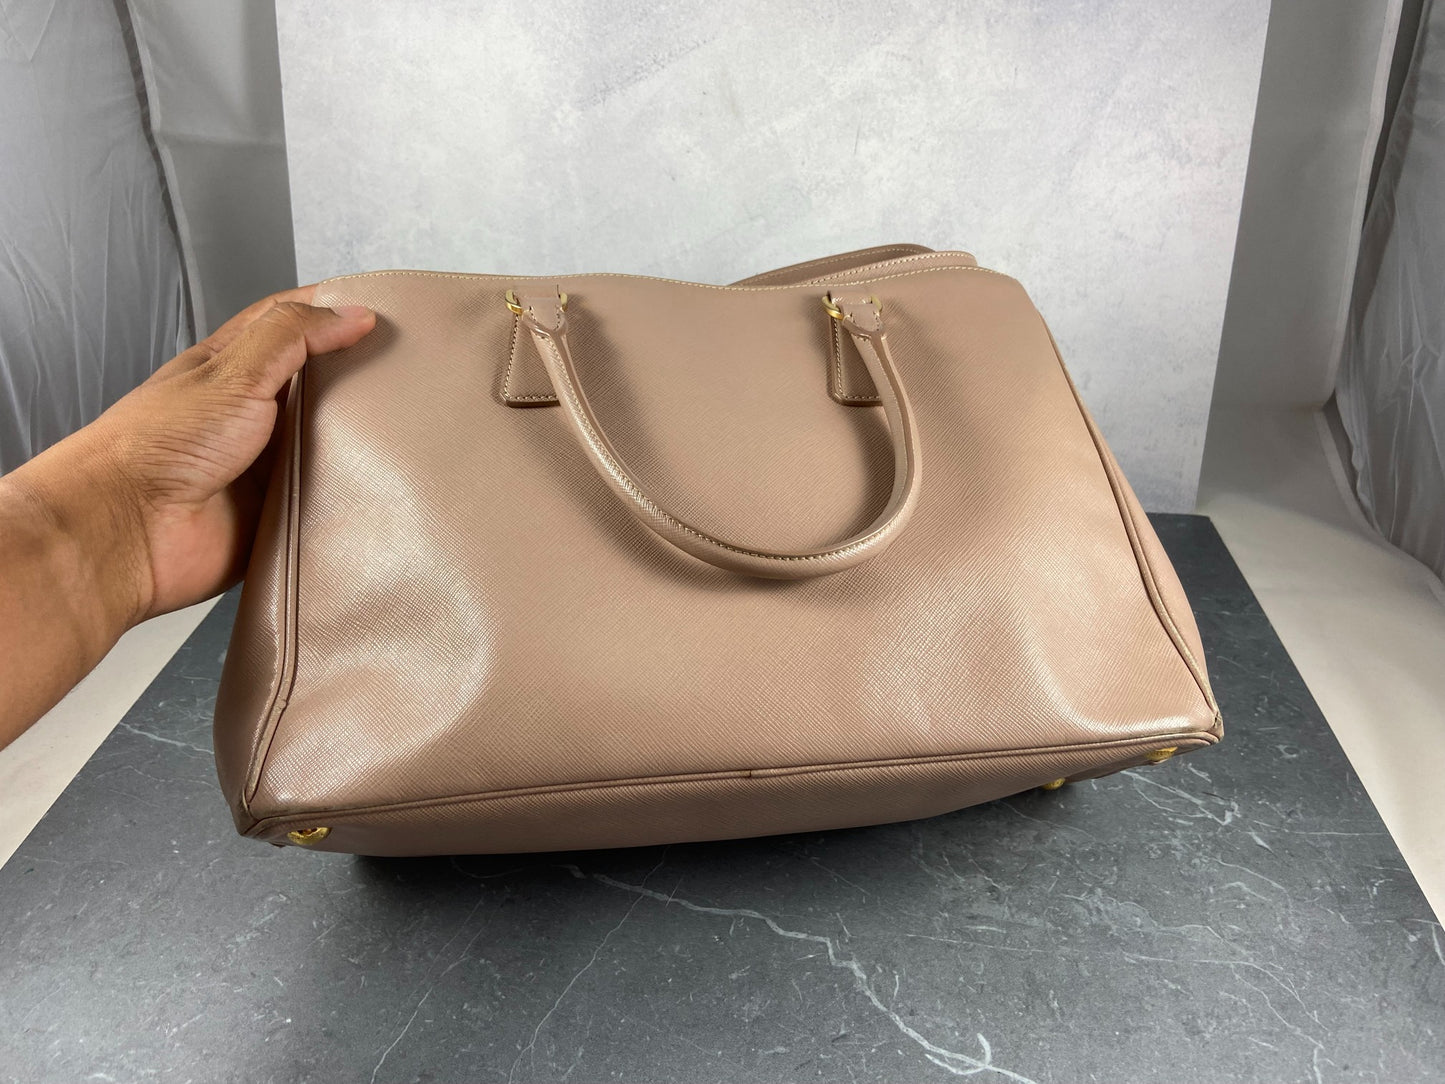 Prada Galleria Hand Bag Beige Saffiano Leather